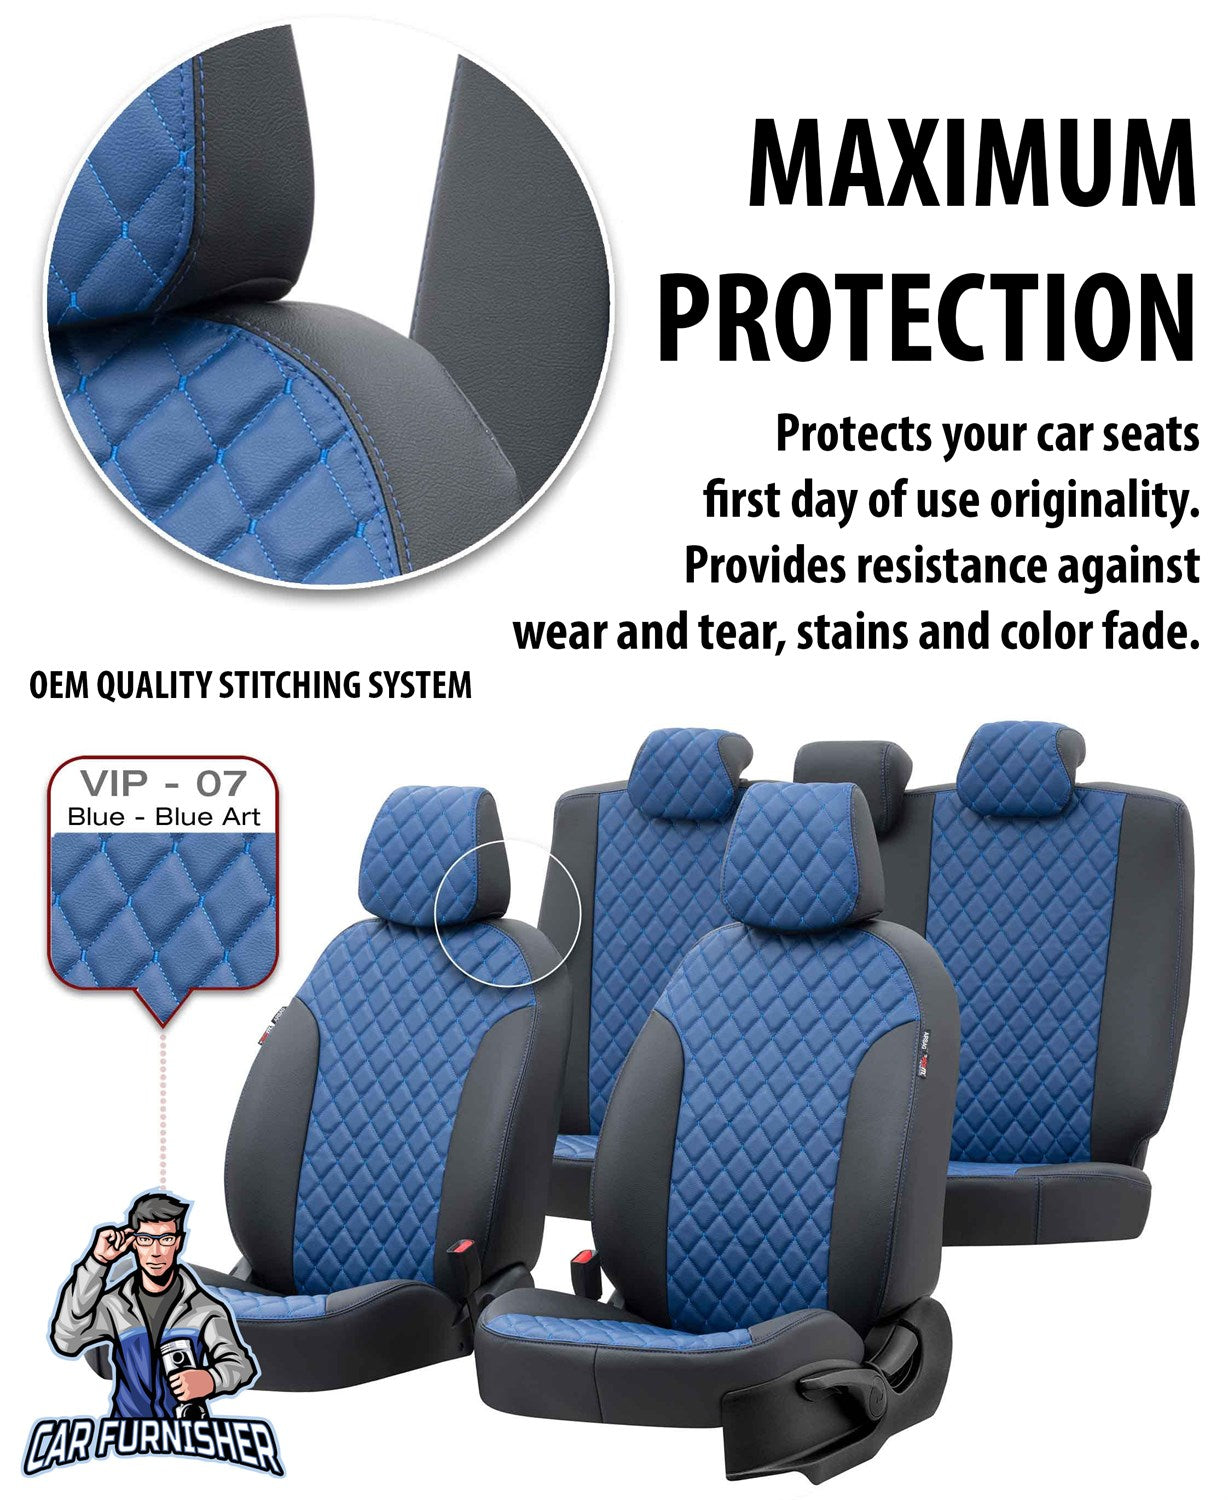 Dacia Sandero Seat Covers Madrid Leather Design Blue Leather